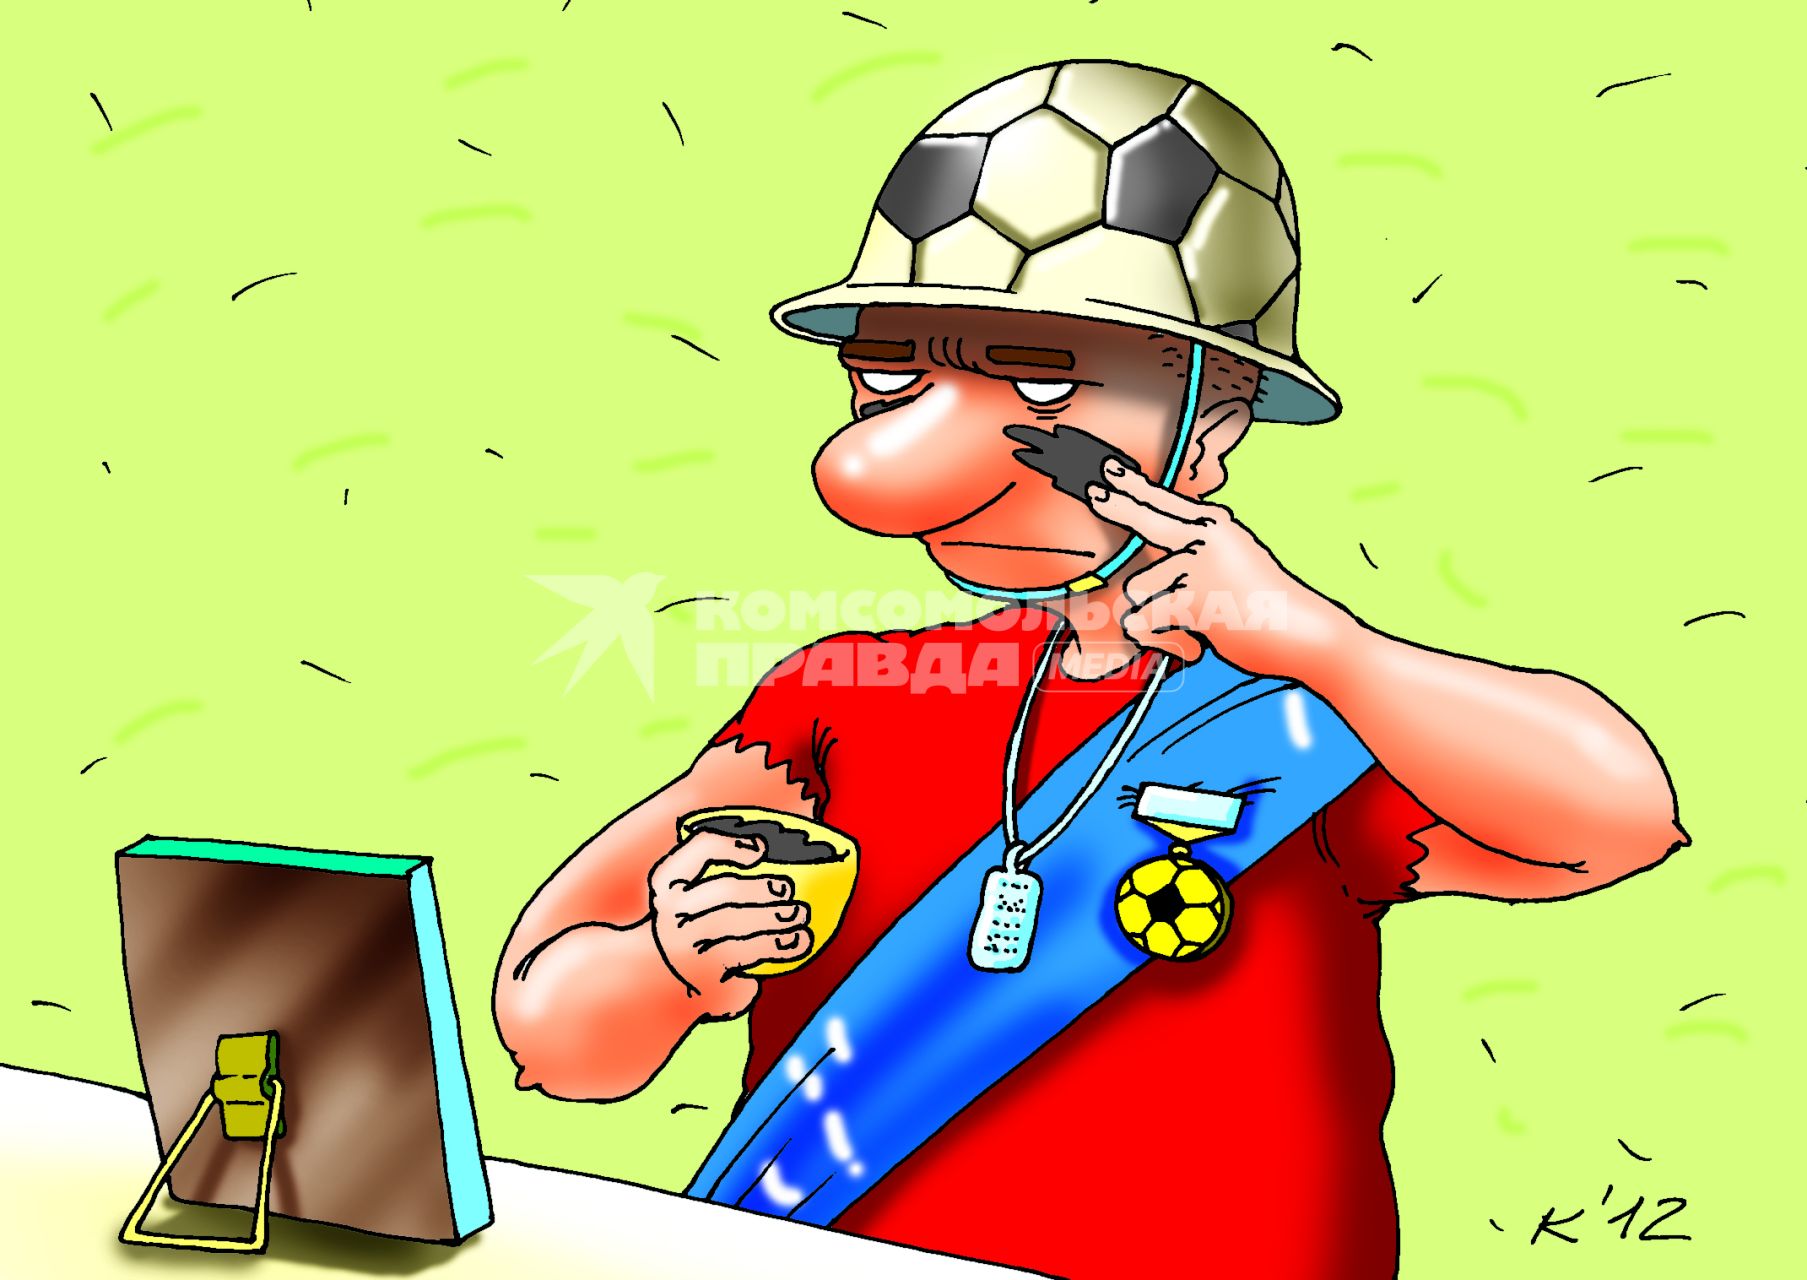 Карикатура на тему футбола.